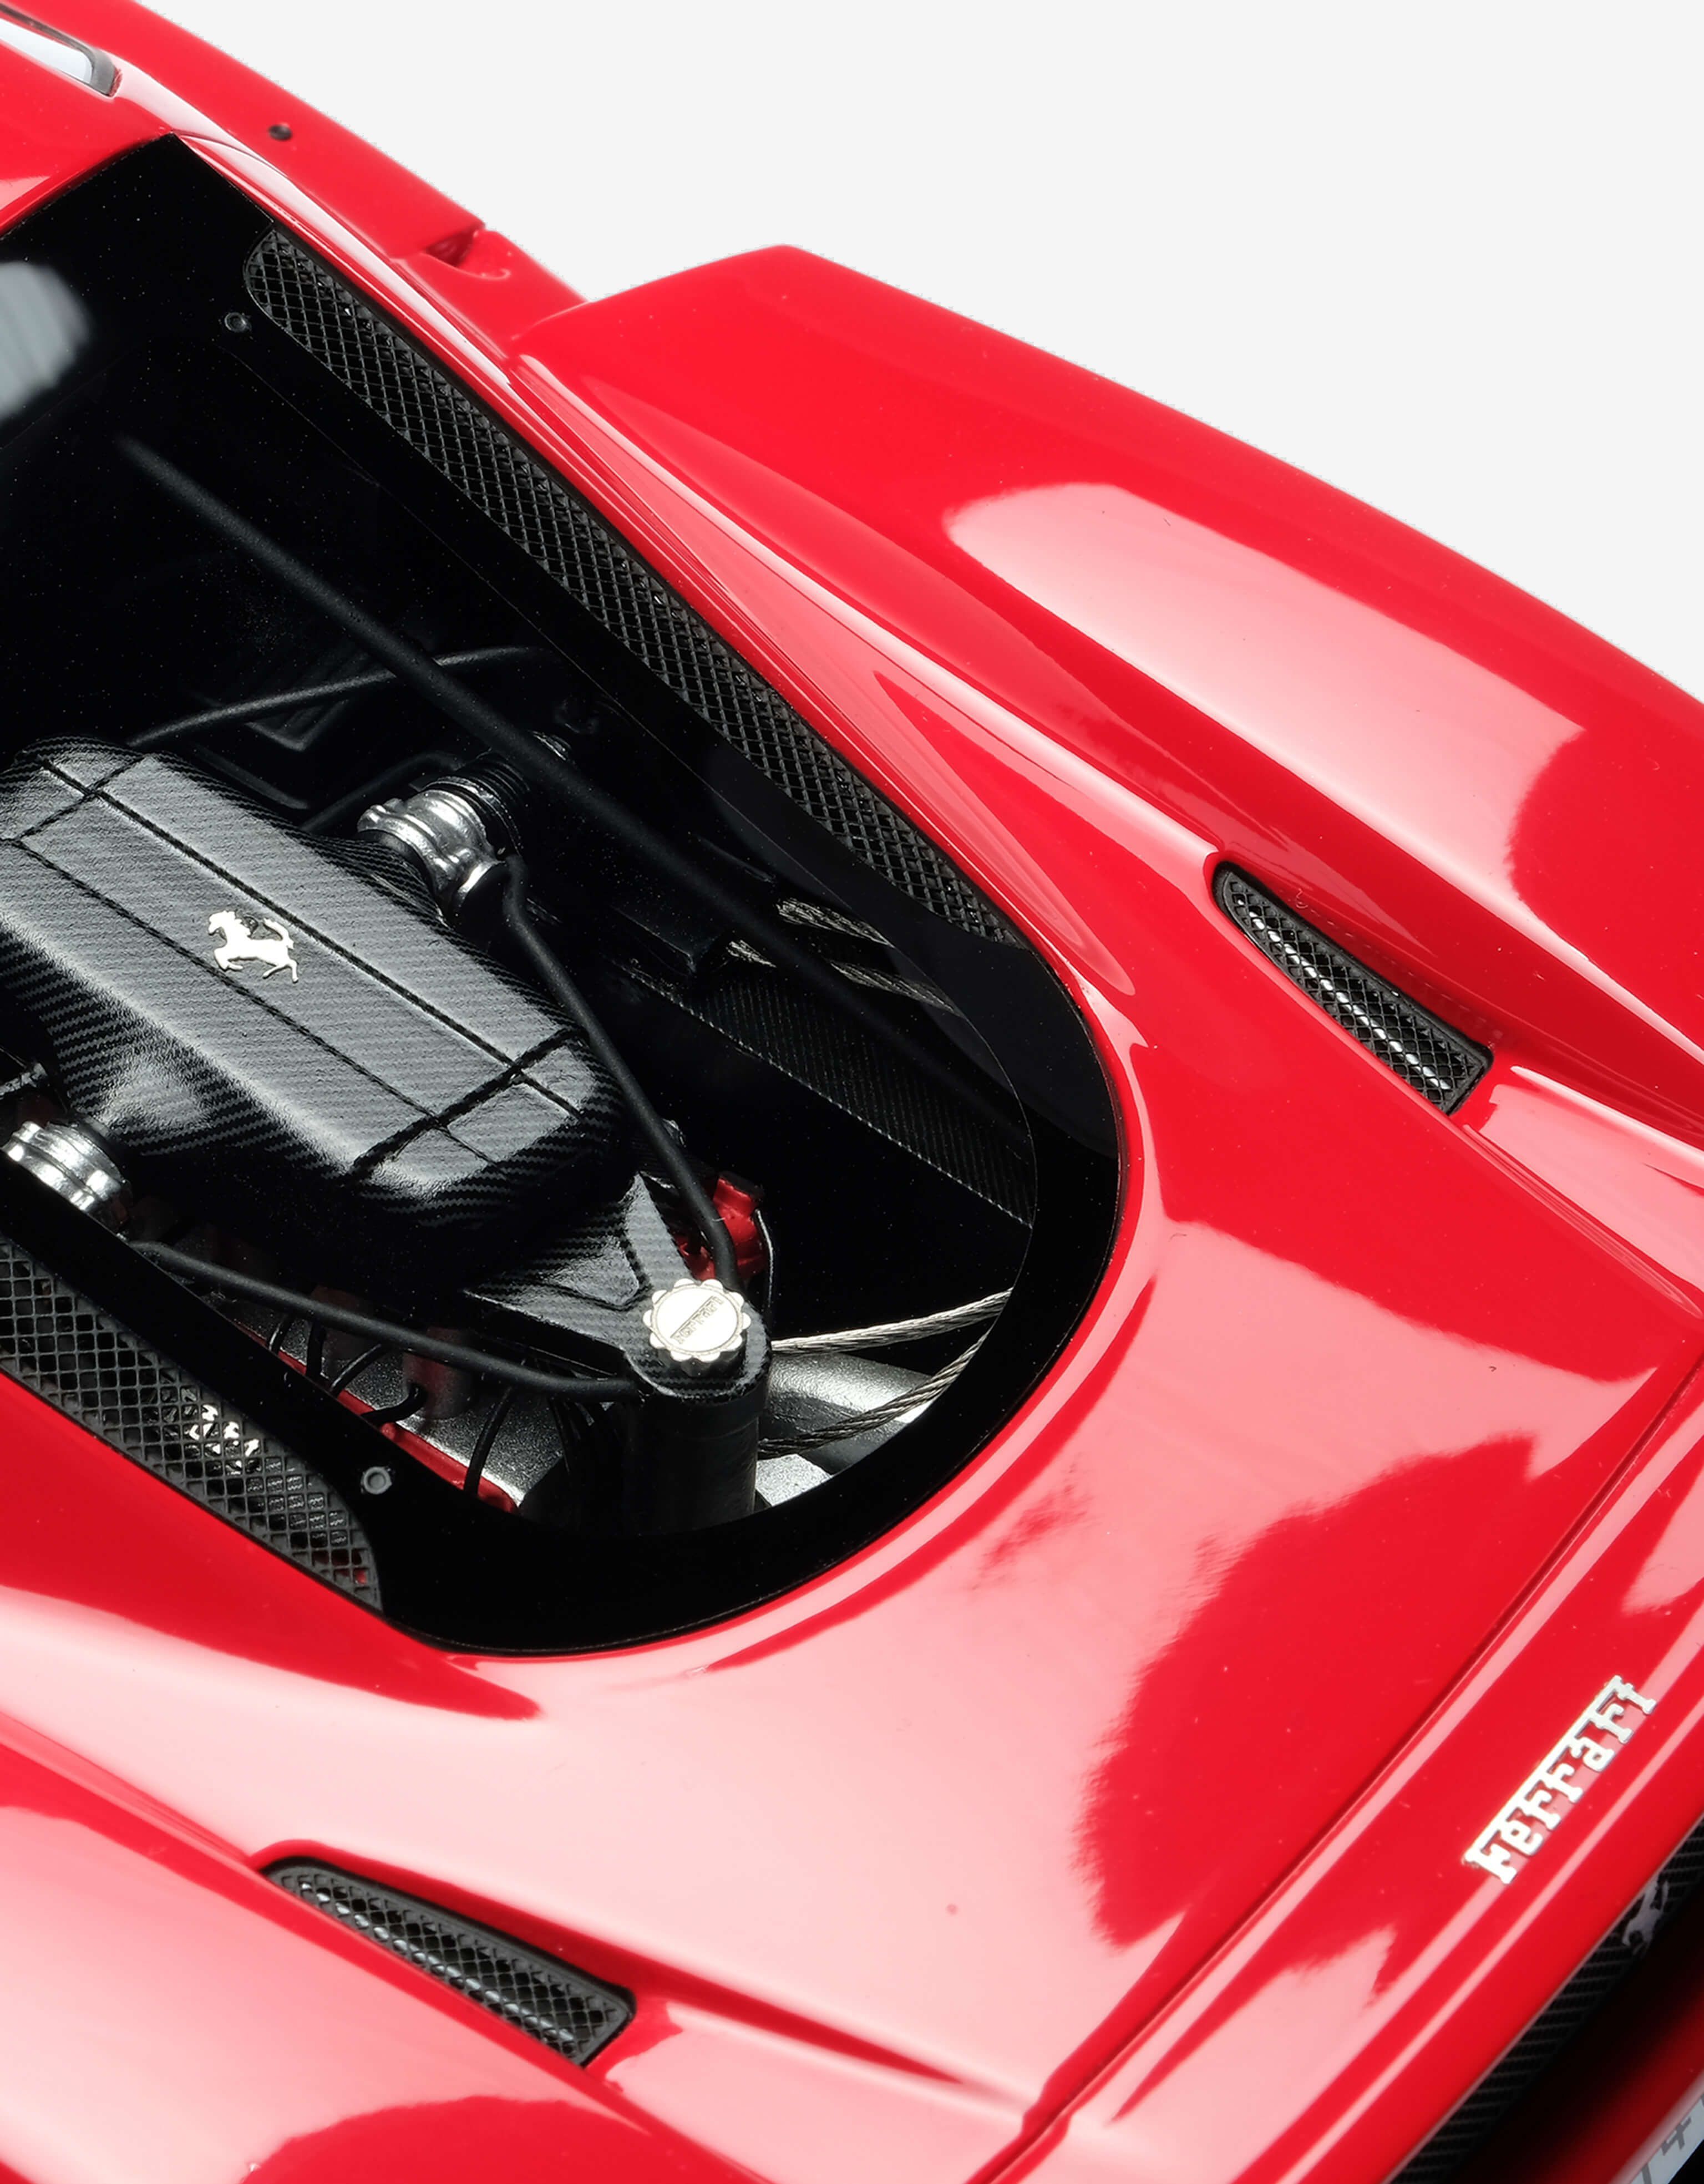 Ferrari Modellauto Ferrari Enzo im Maßstab 1:18 Rot L7814f